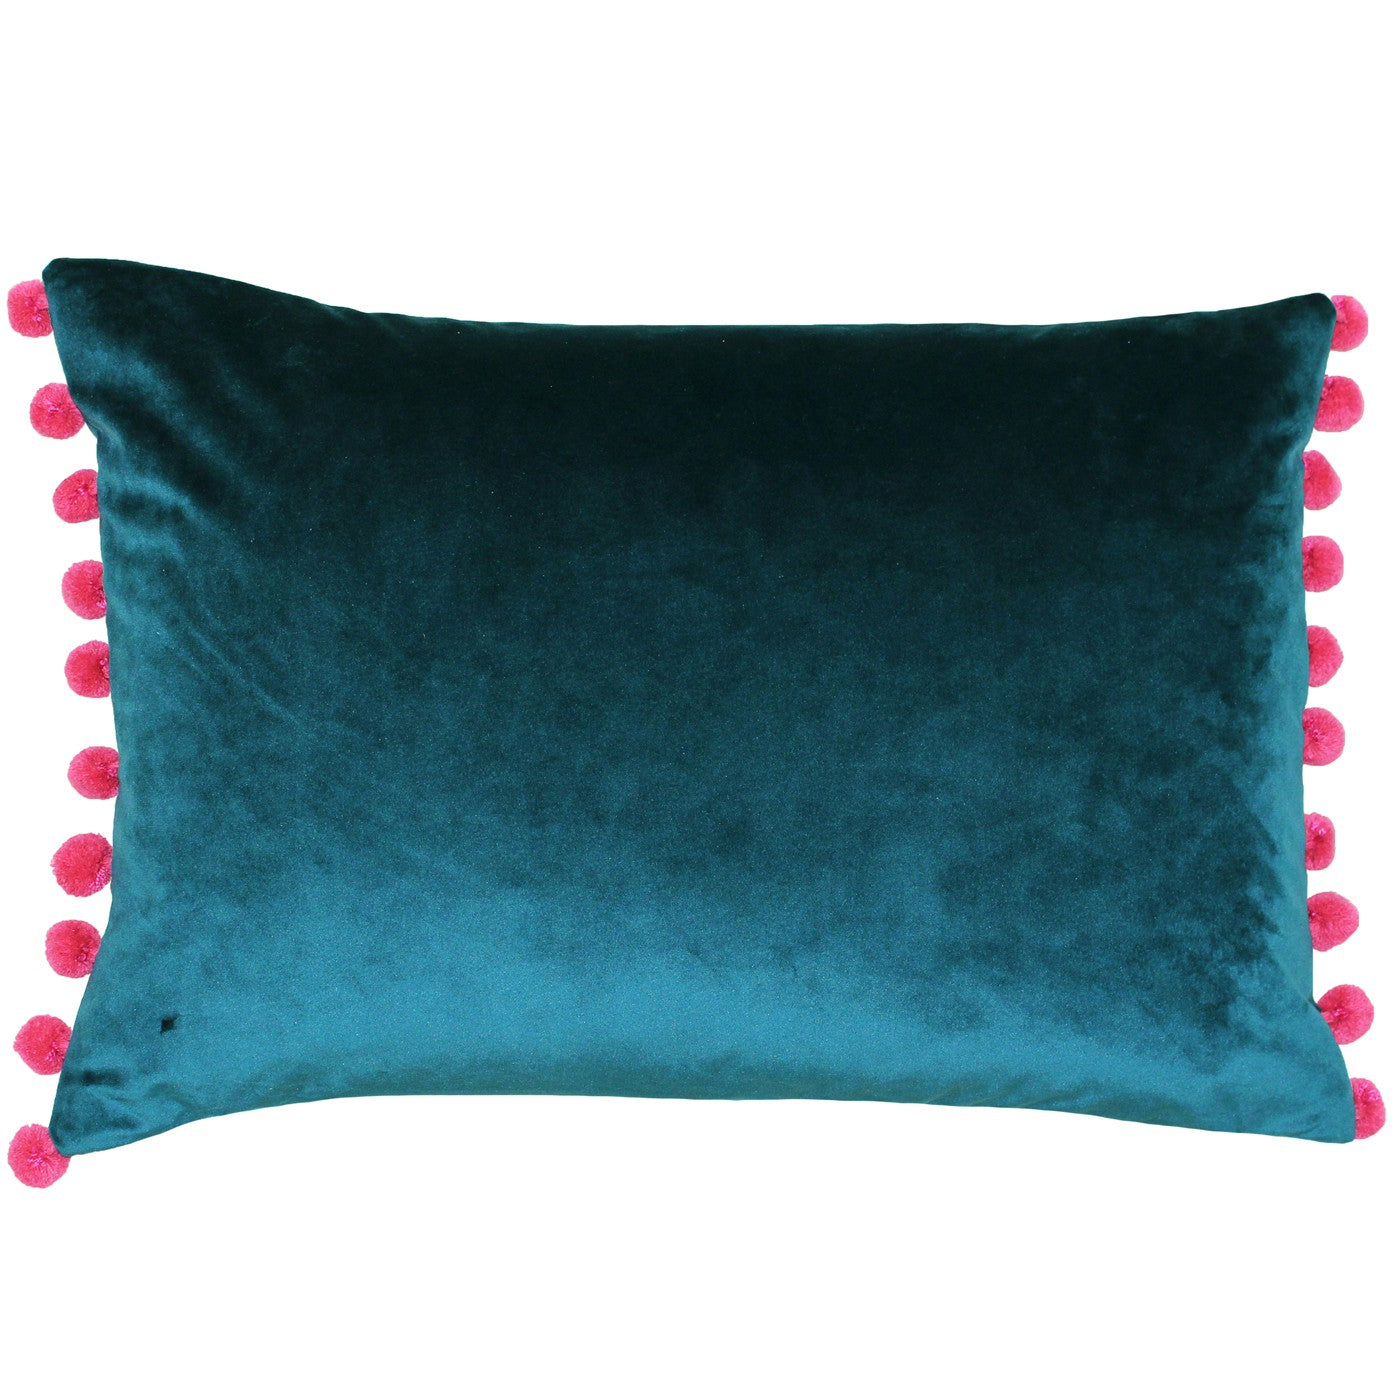 Teal Velvet Rectangle Cushion with Berry coloured Pom Poms